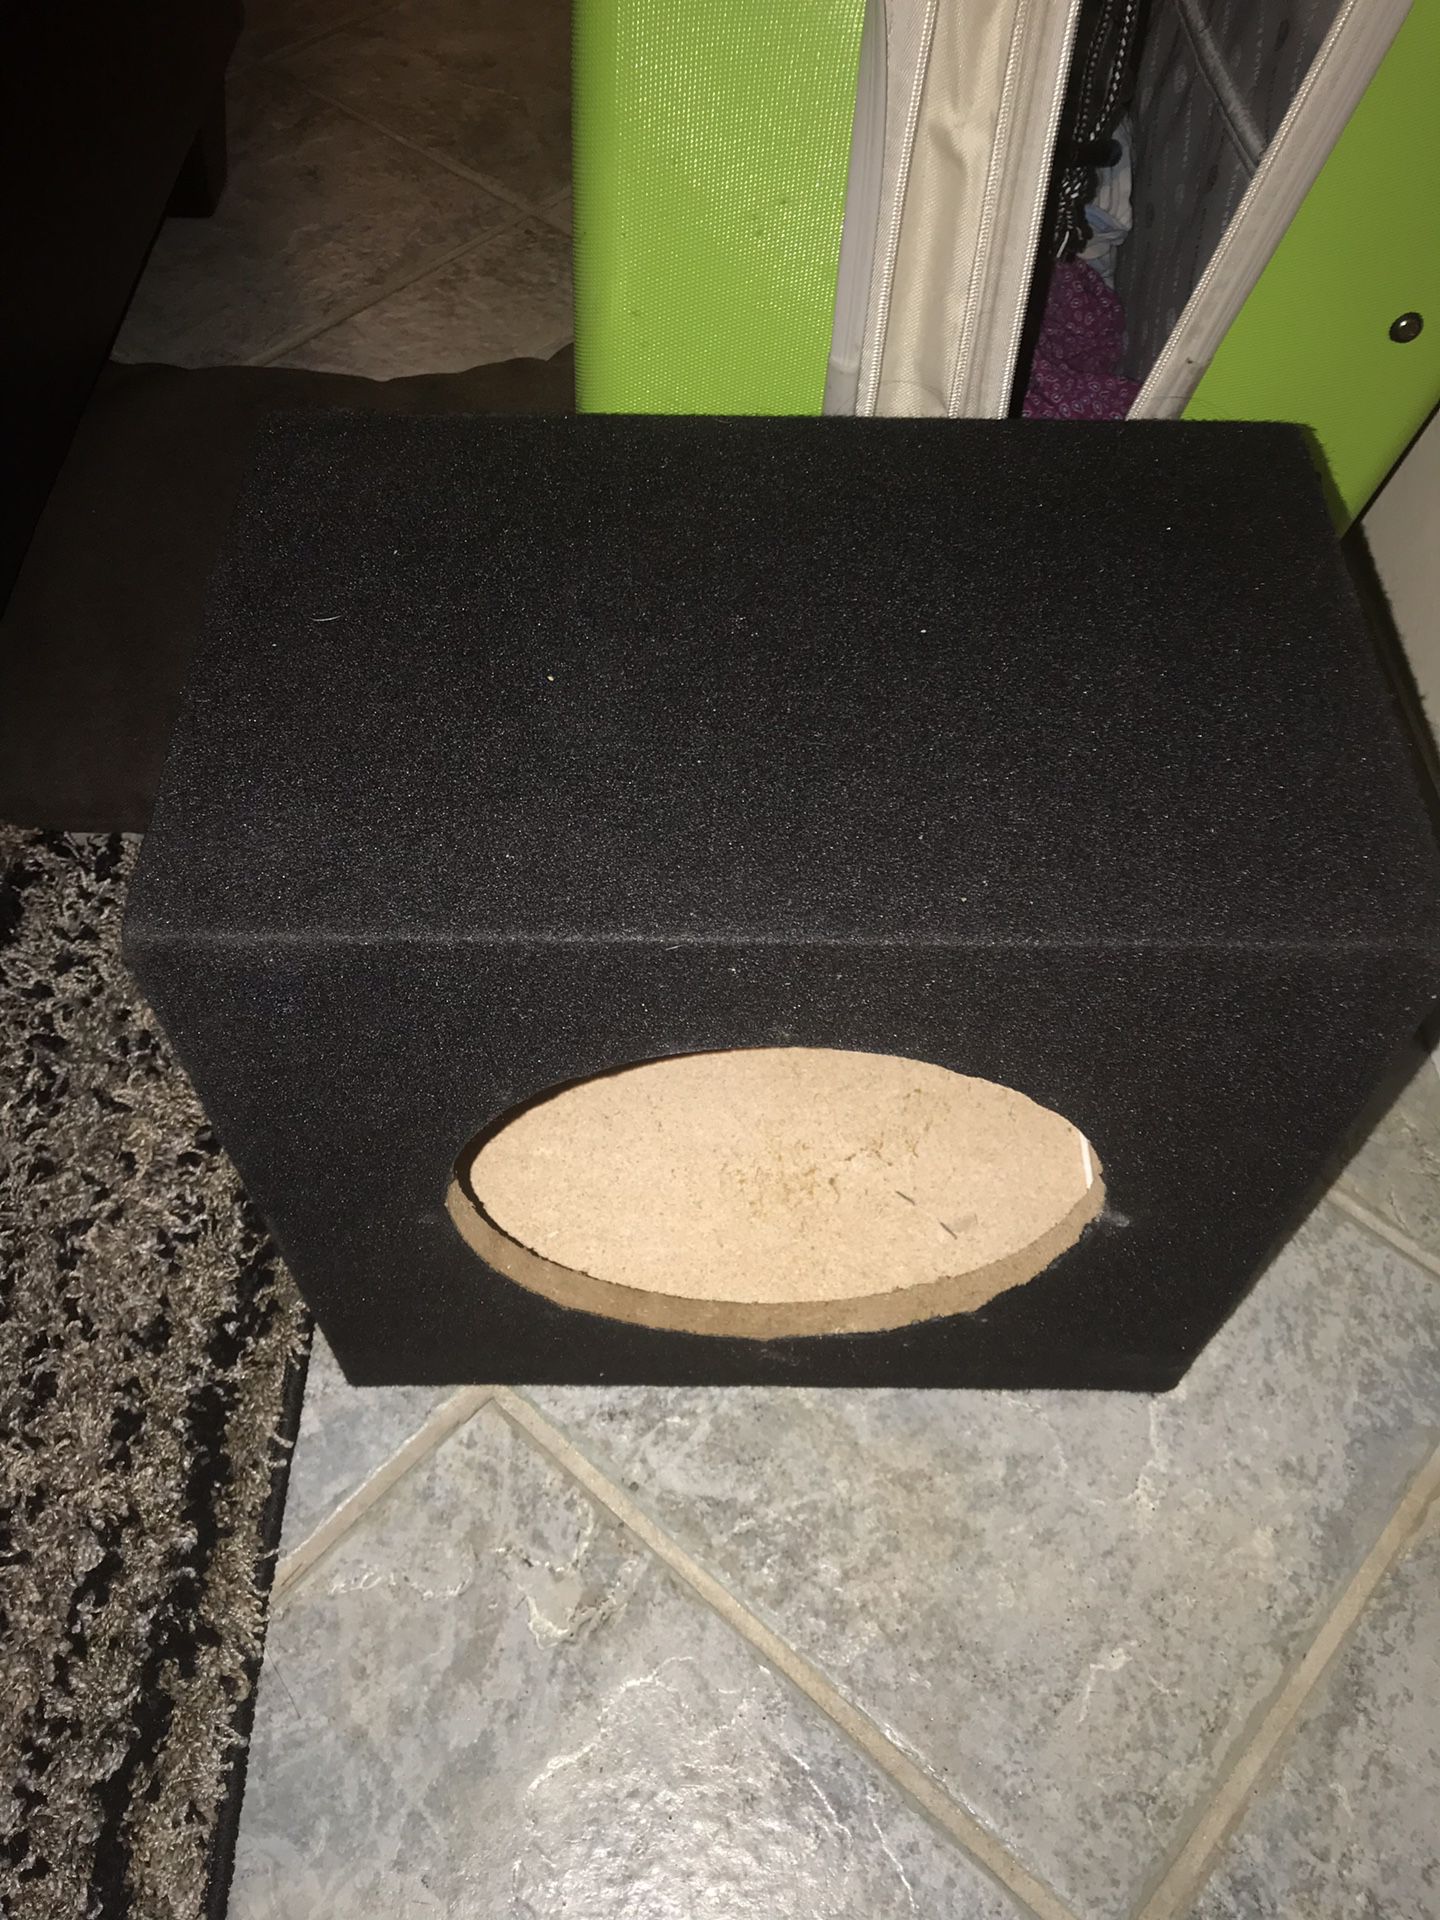 10 inch speaker box